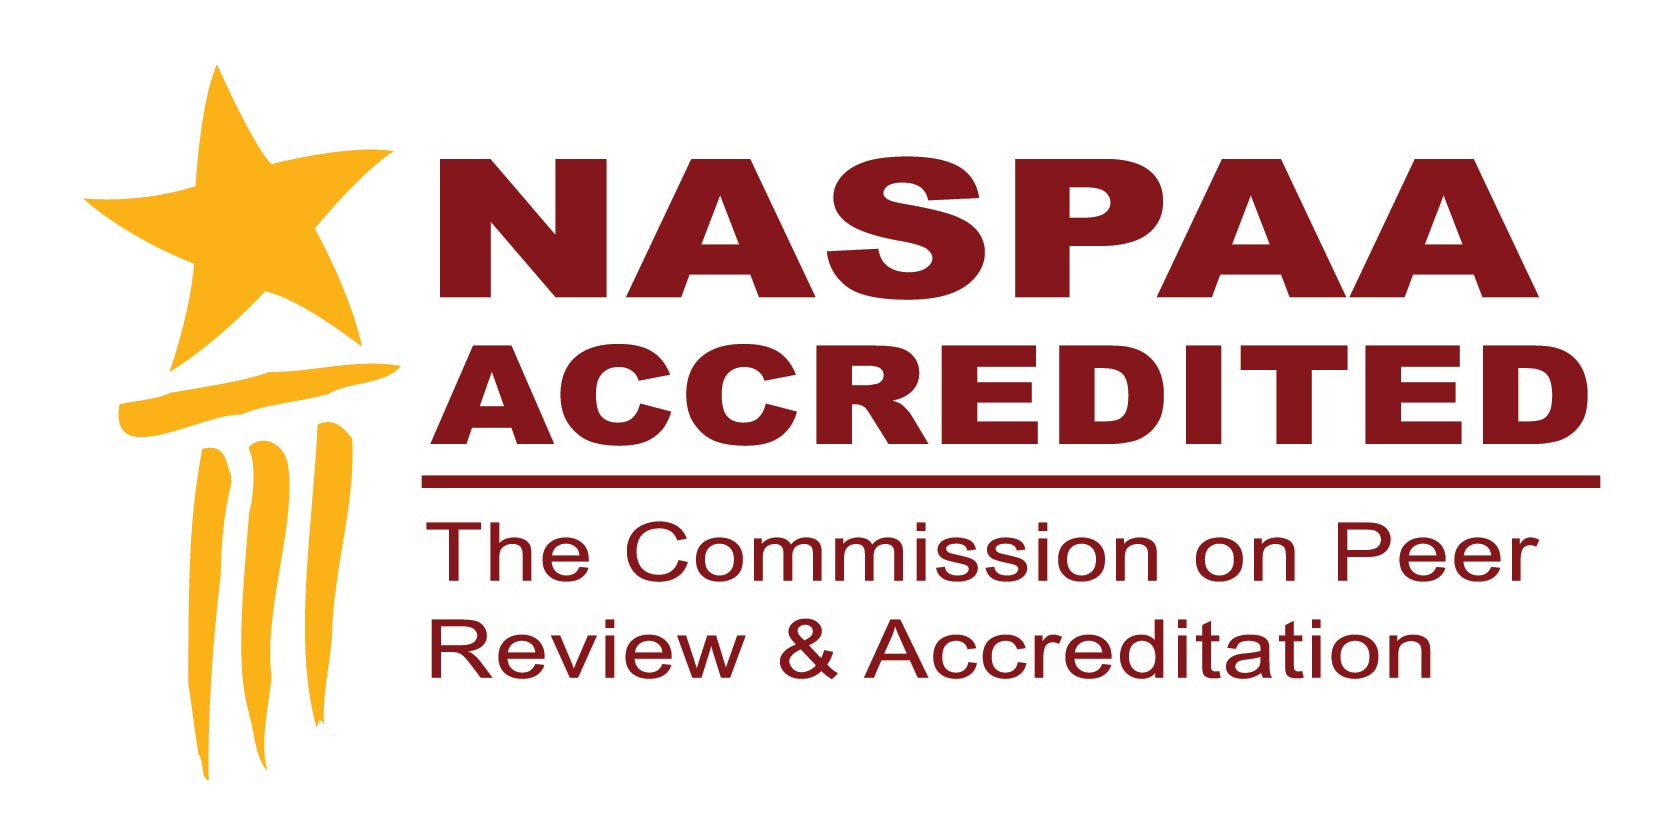 NASPAA Accredited logo